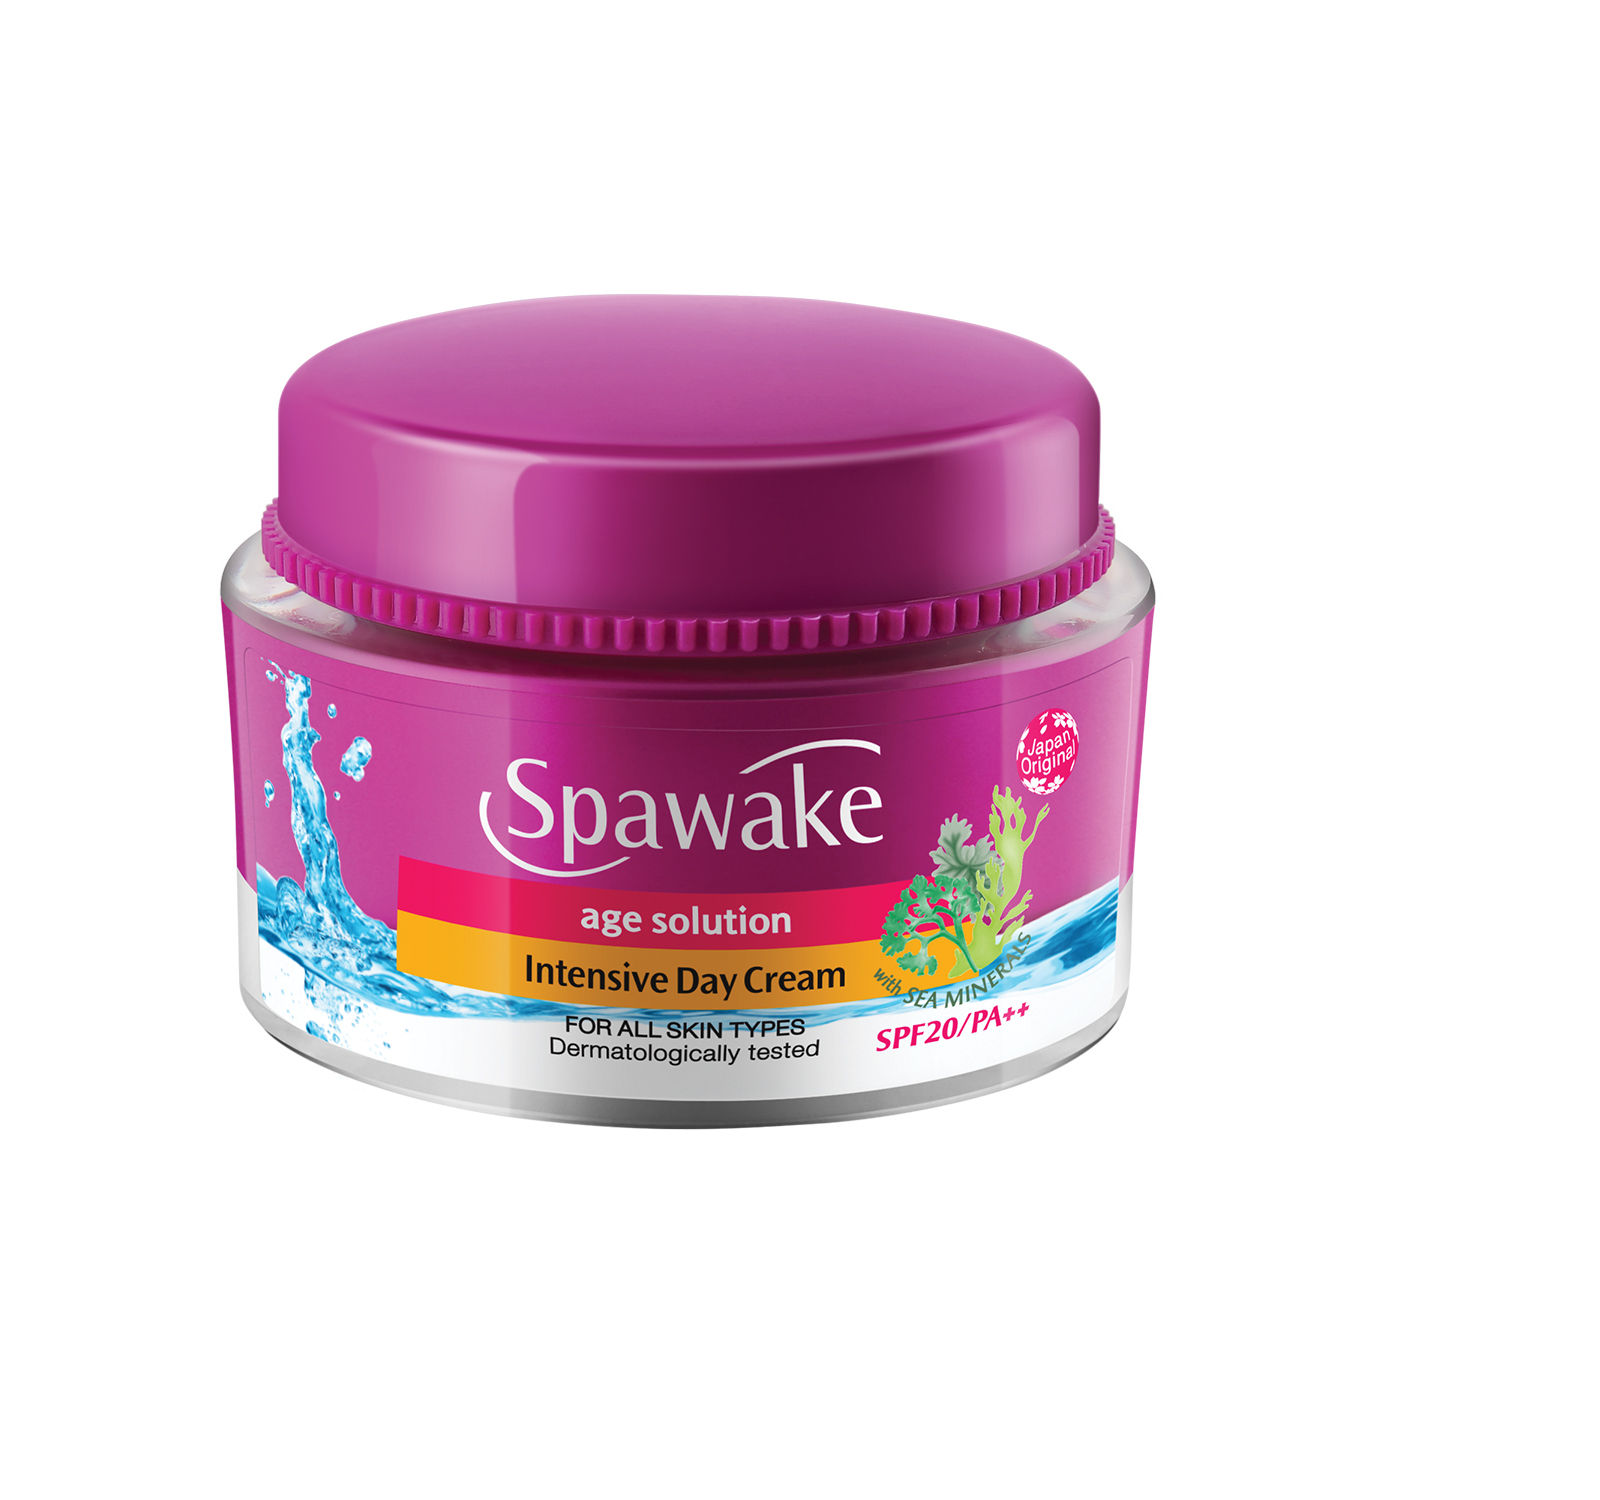 Spawake Age Solution Intensive Day Cream SPF 20